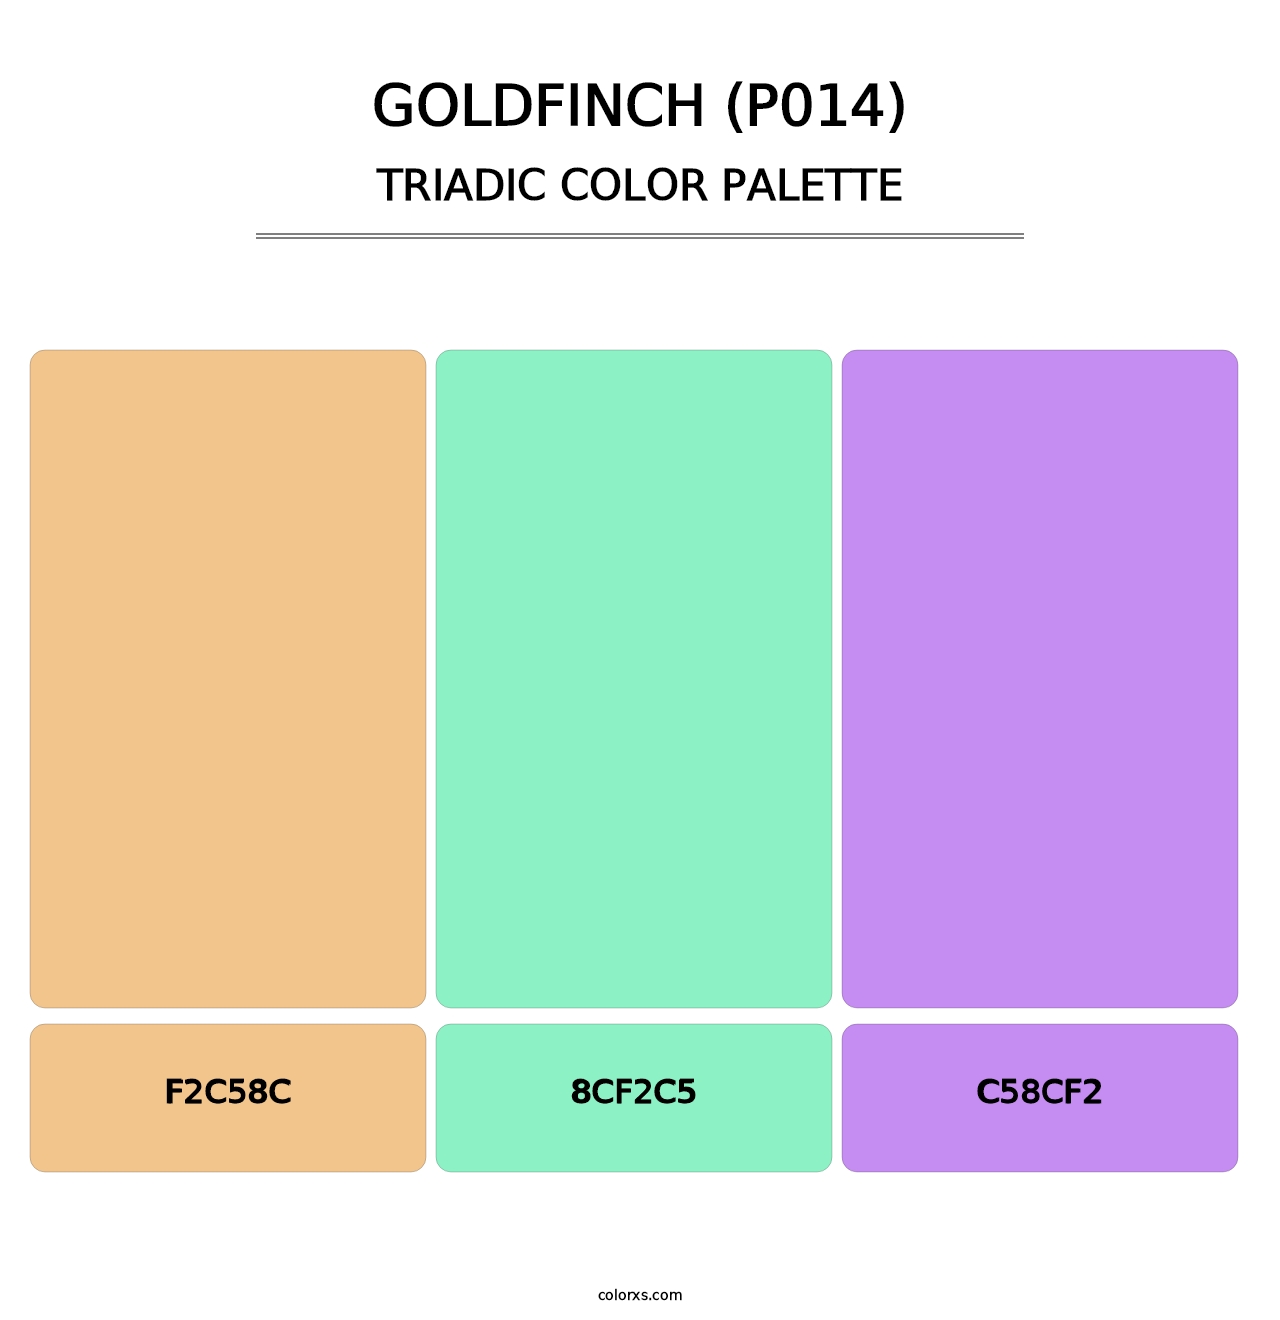 Goldfinch (P014) - Triadic Color Palette